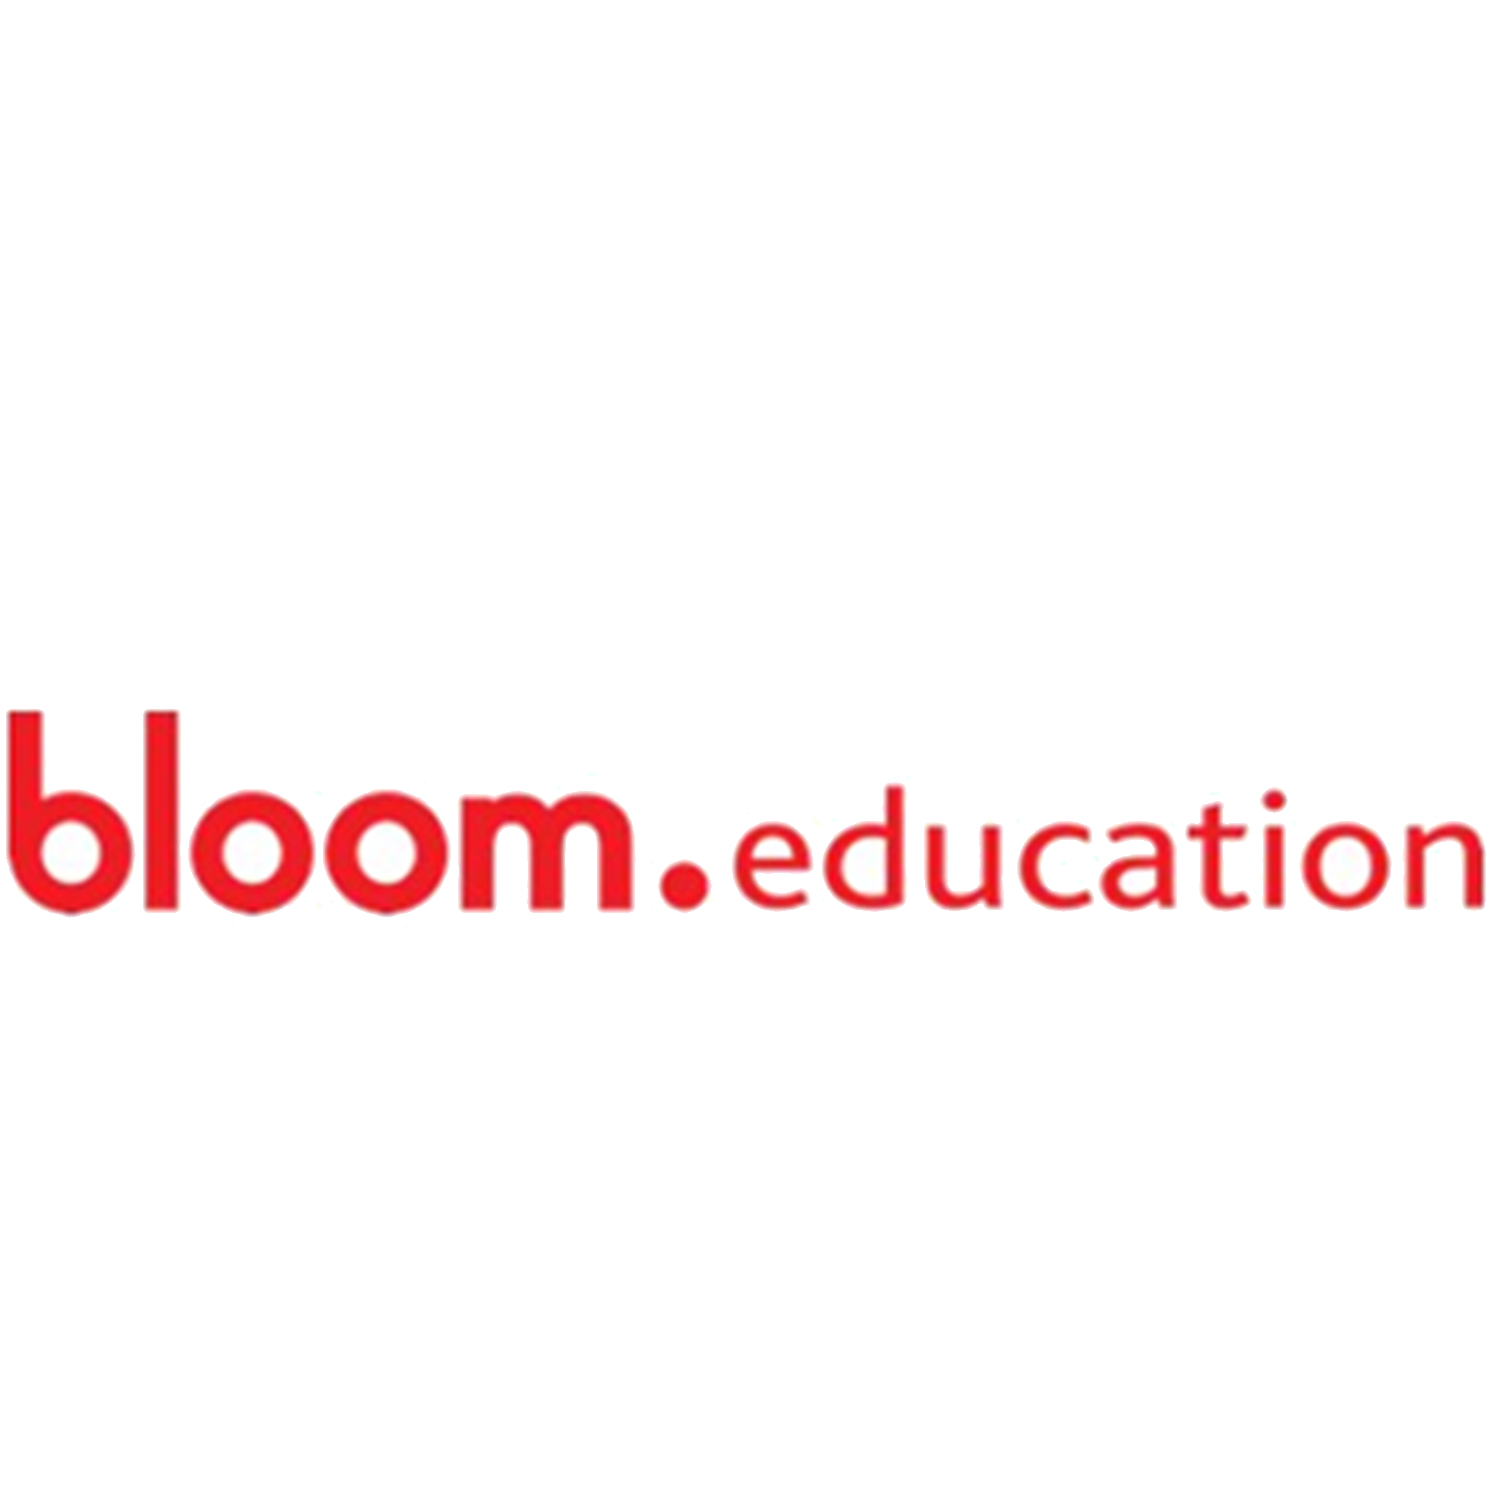 Bloom education